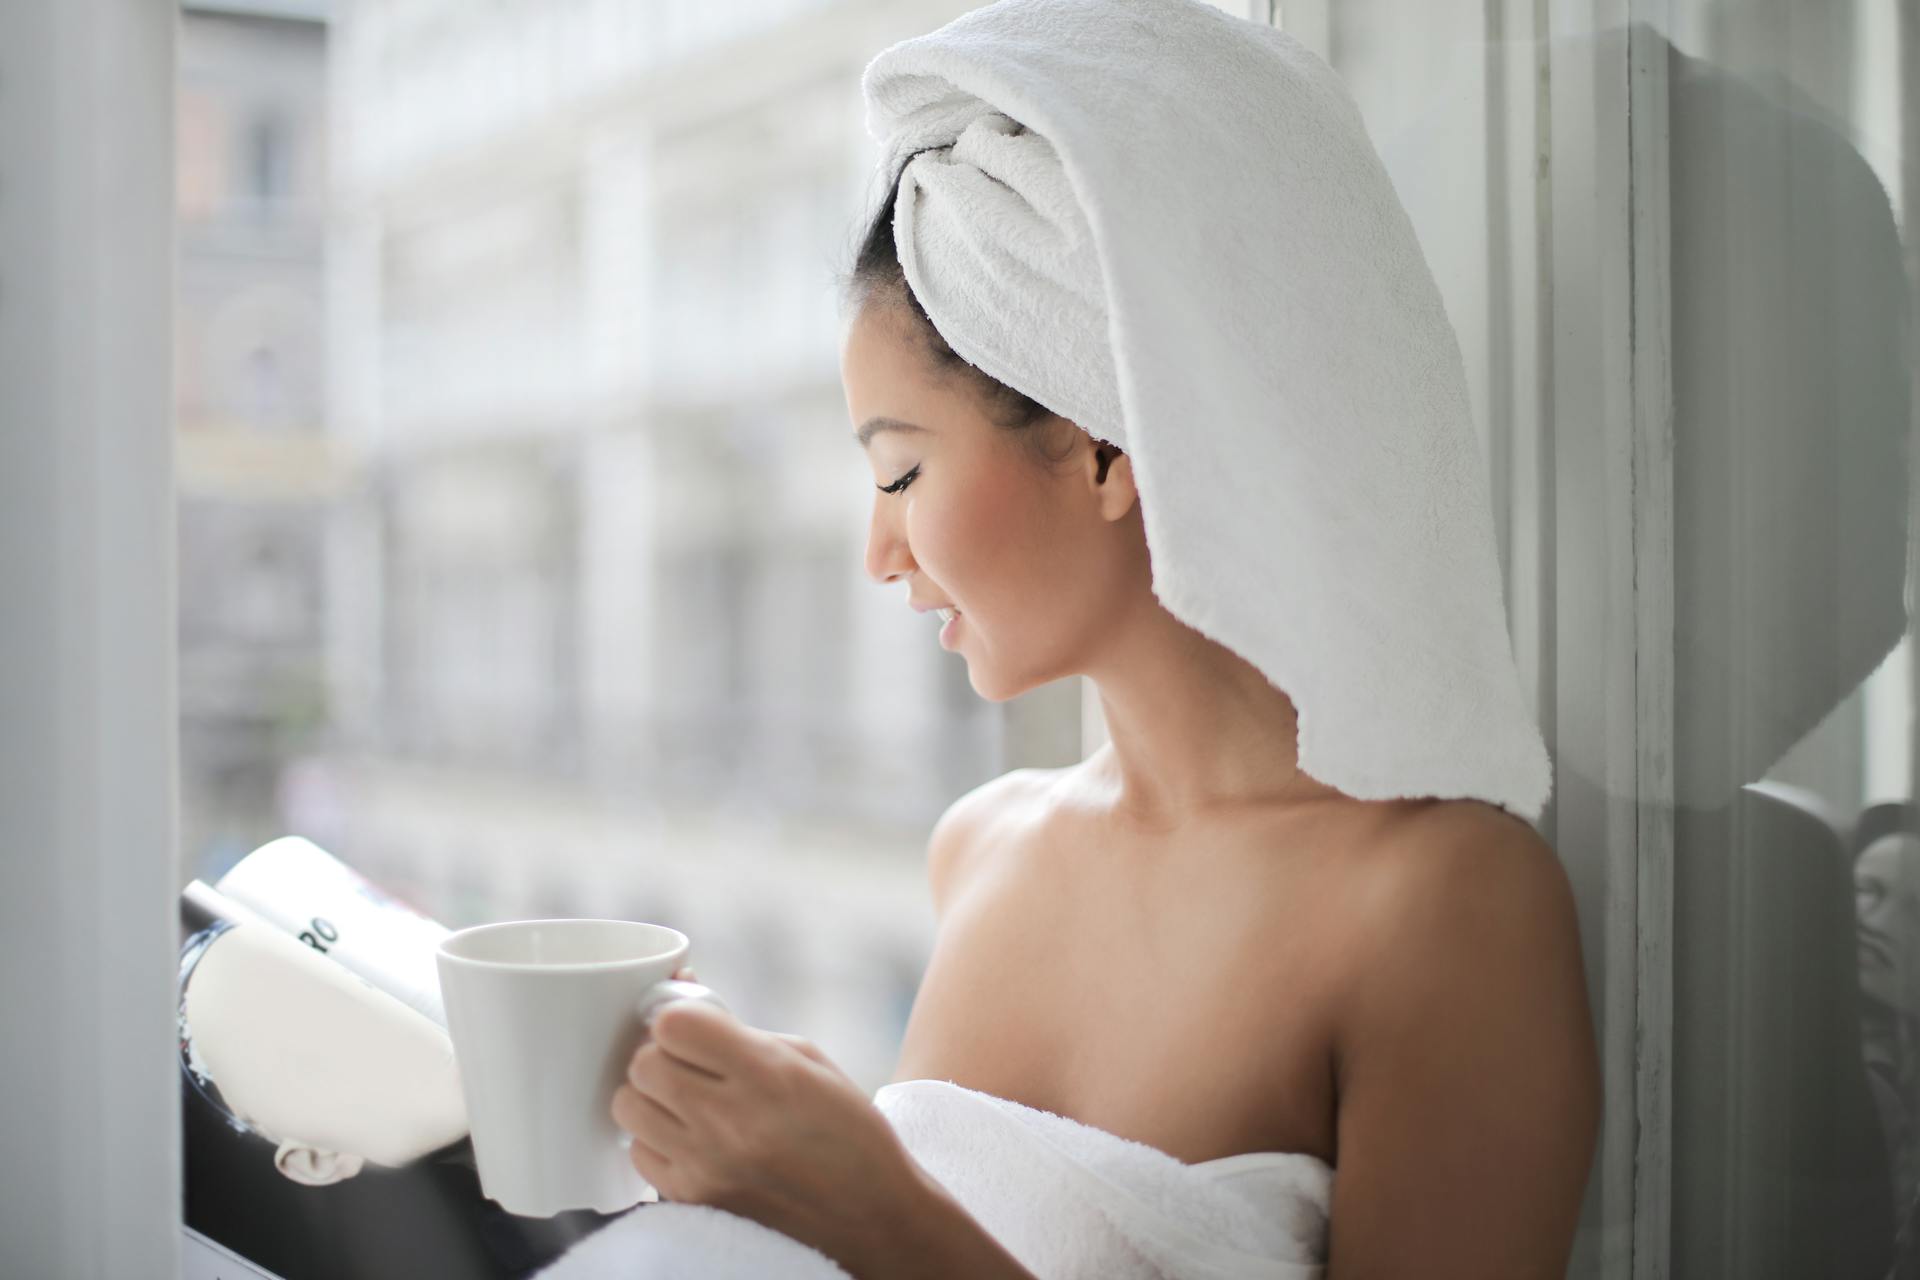 A woman reading a magazine and holding a mug near a glass window | Source: Pexels